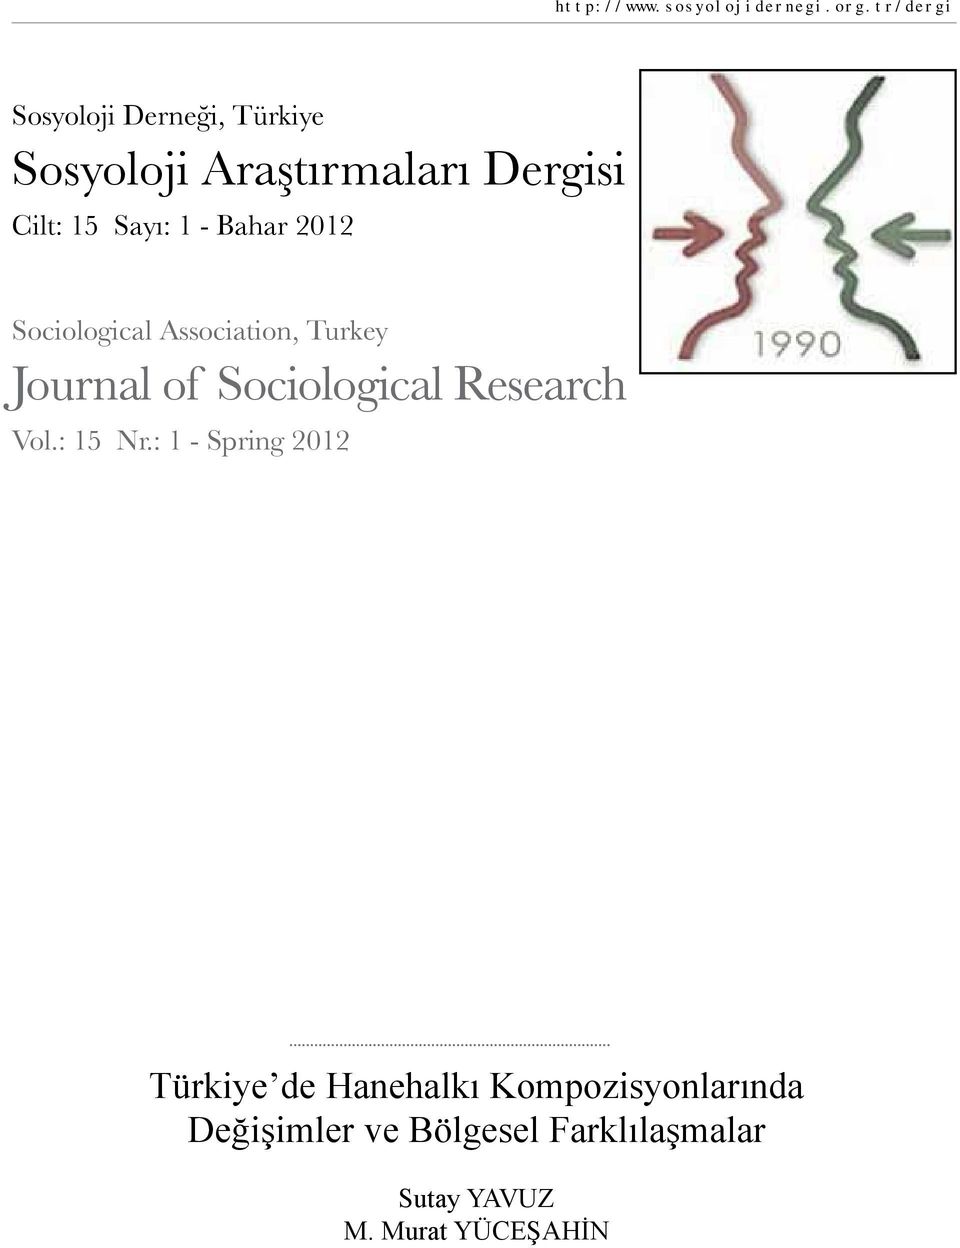 1 - Bahar 2012 Sociological Association, Turkey Journal of Sociological Research